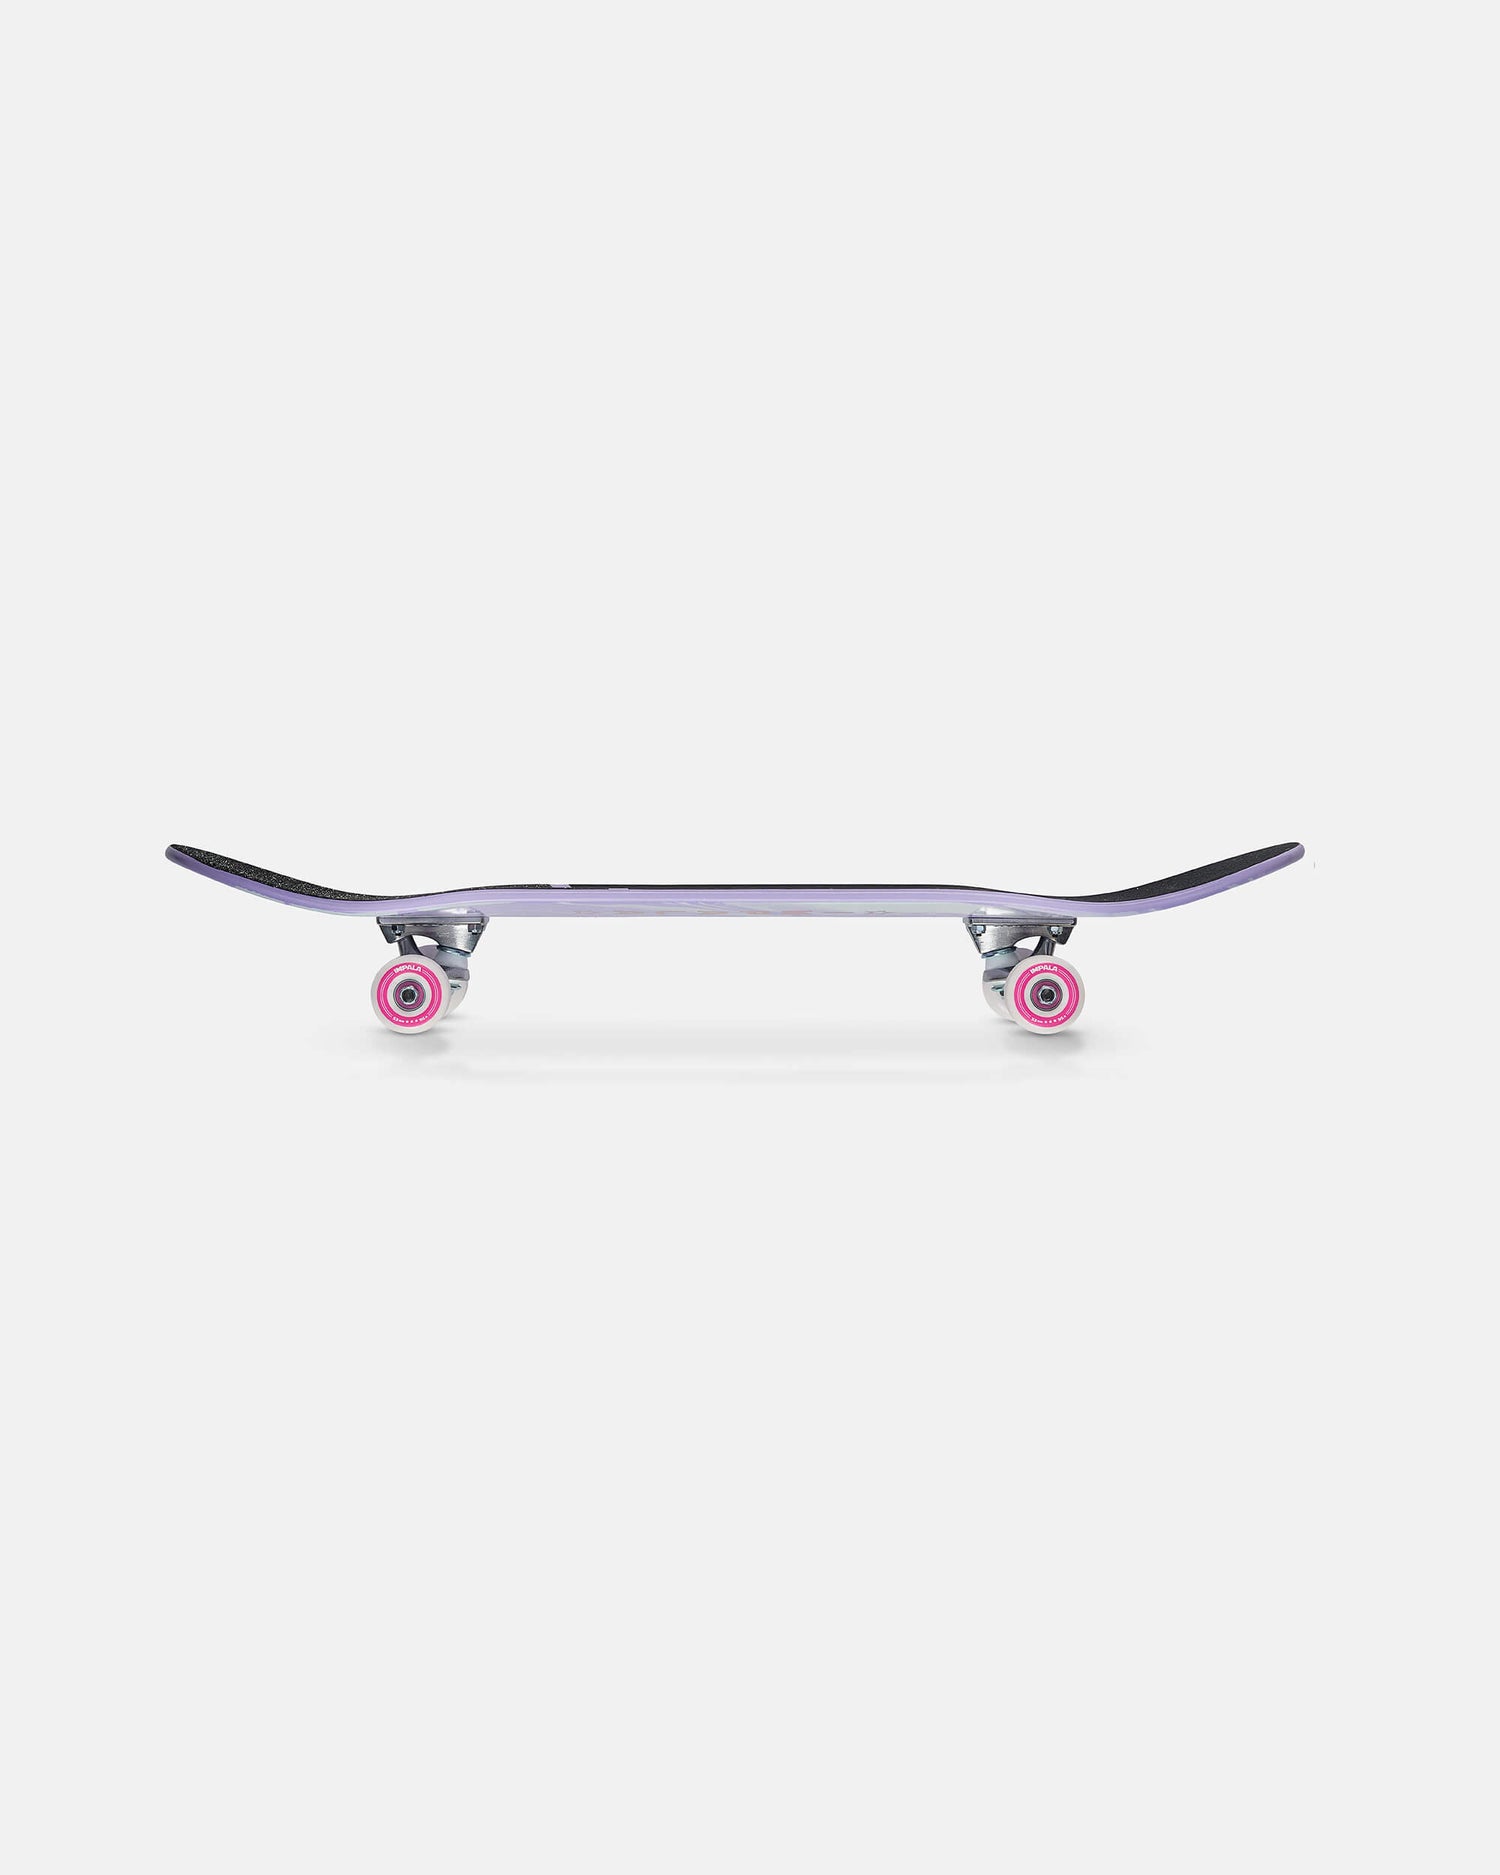 Impala Cosmos Skateboard - Purple 7.75"